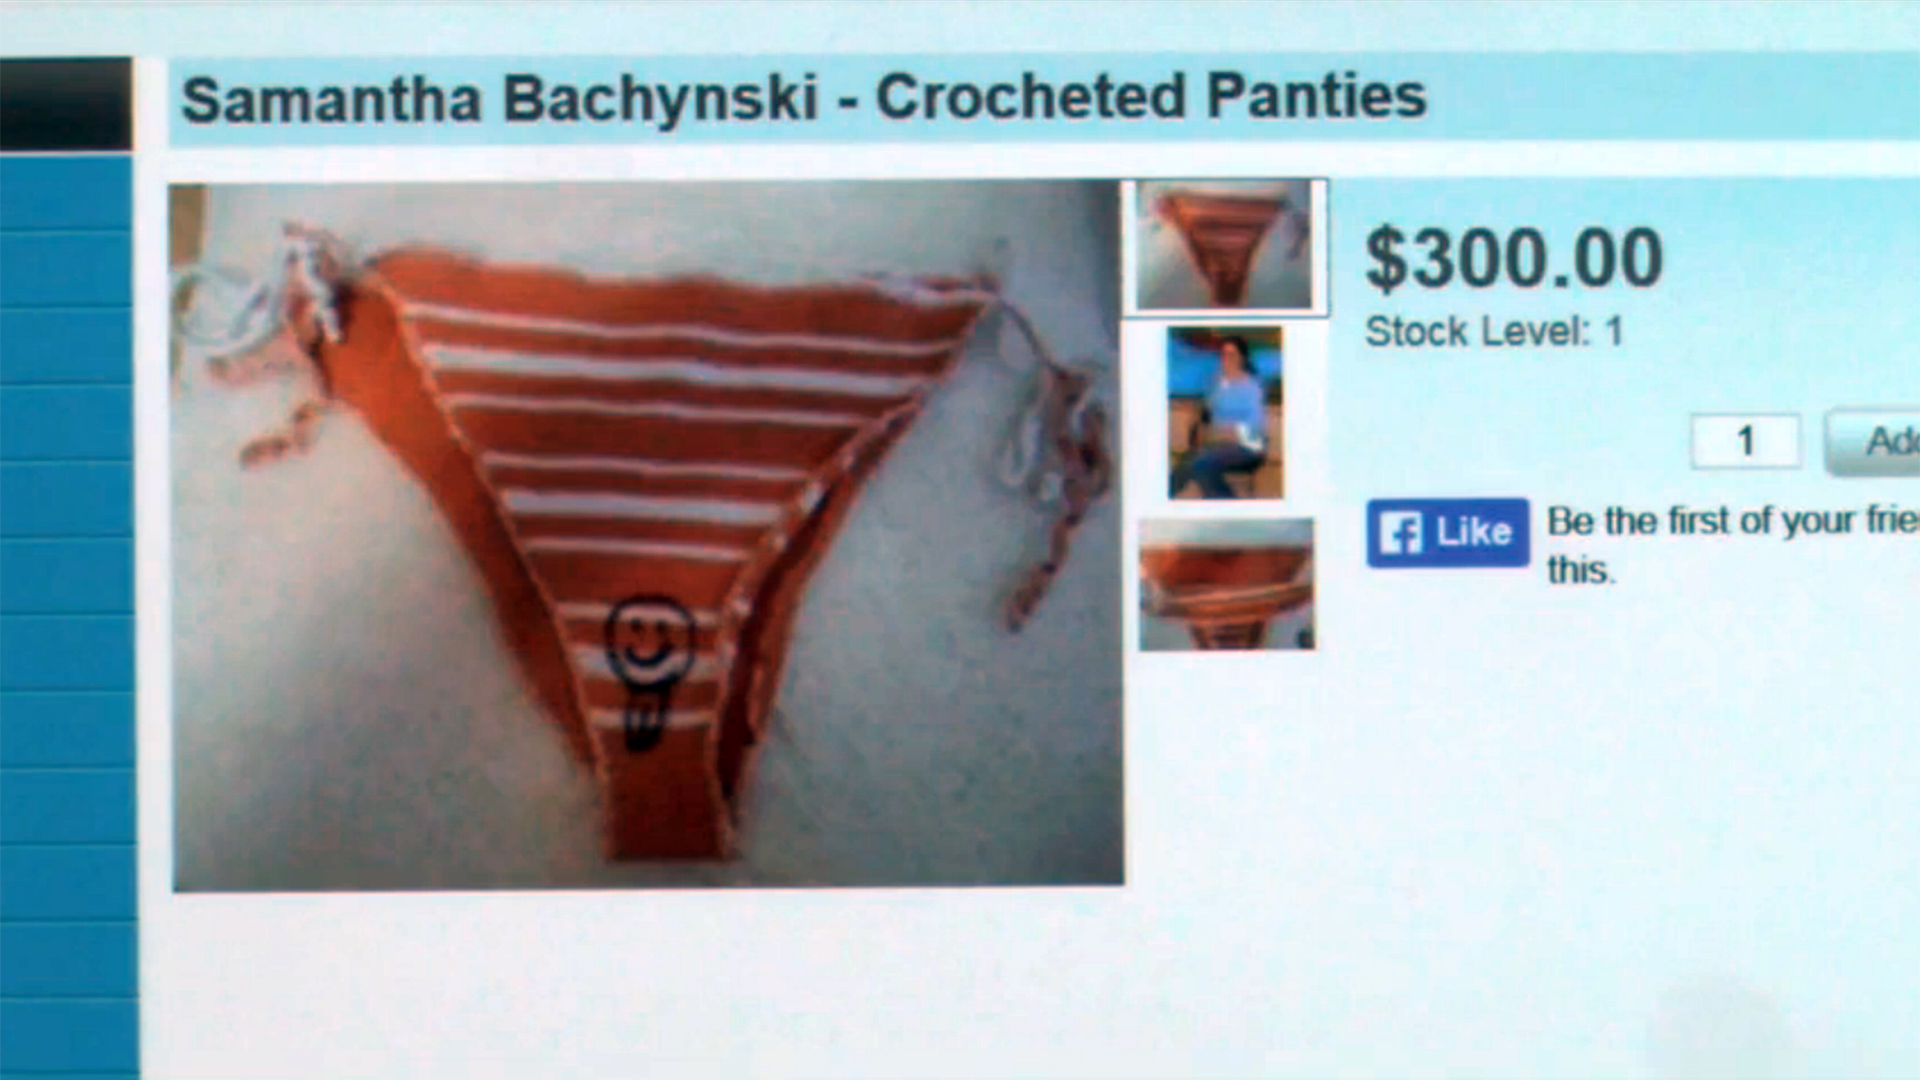 Killer's Crocheted Panties for Sale on 'Murderabilia' Website